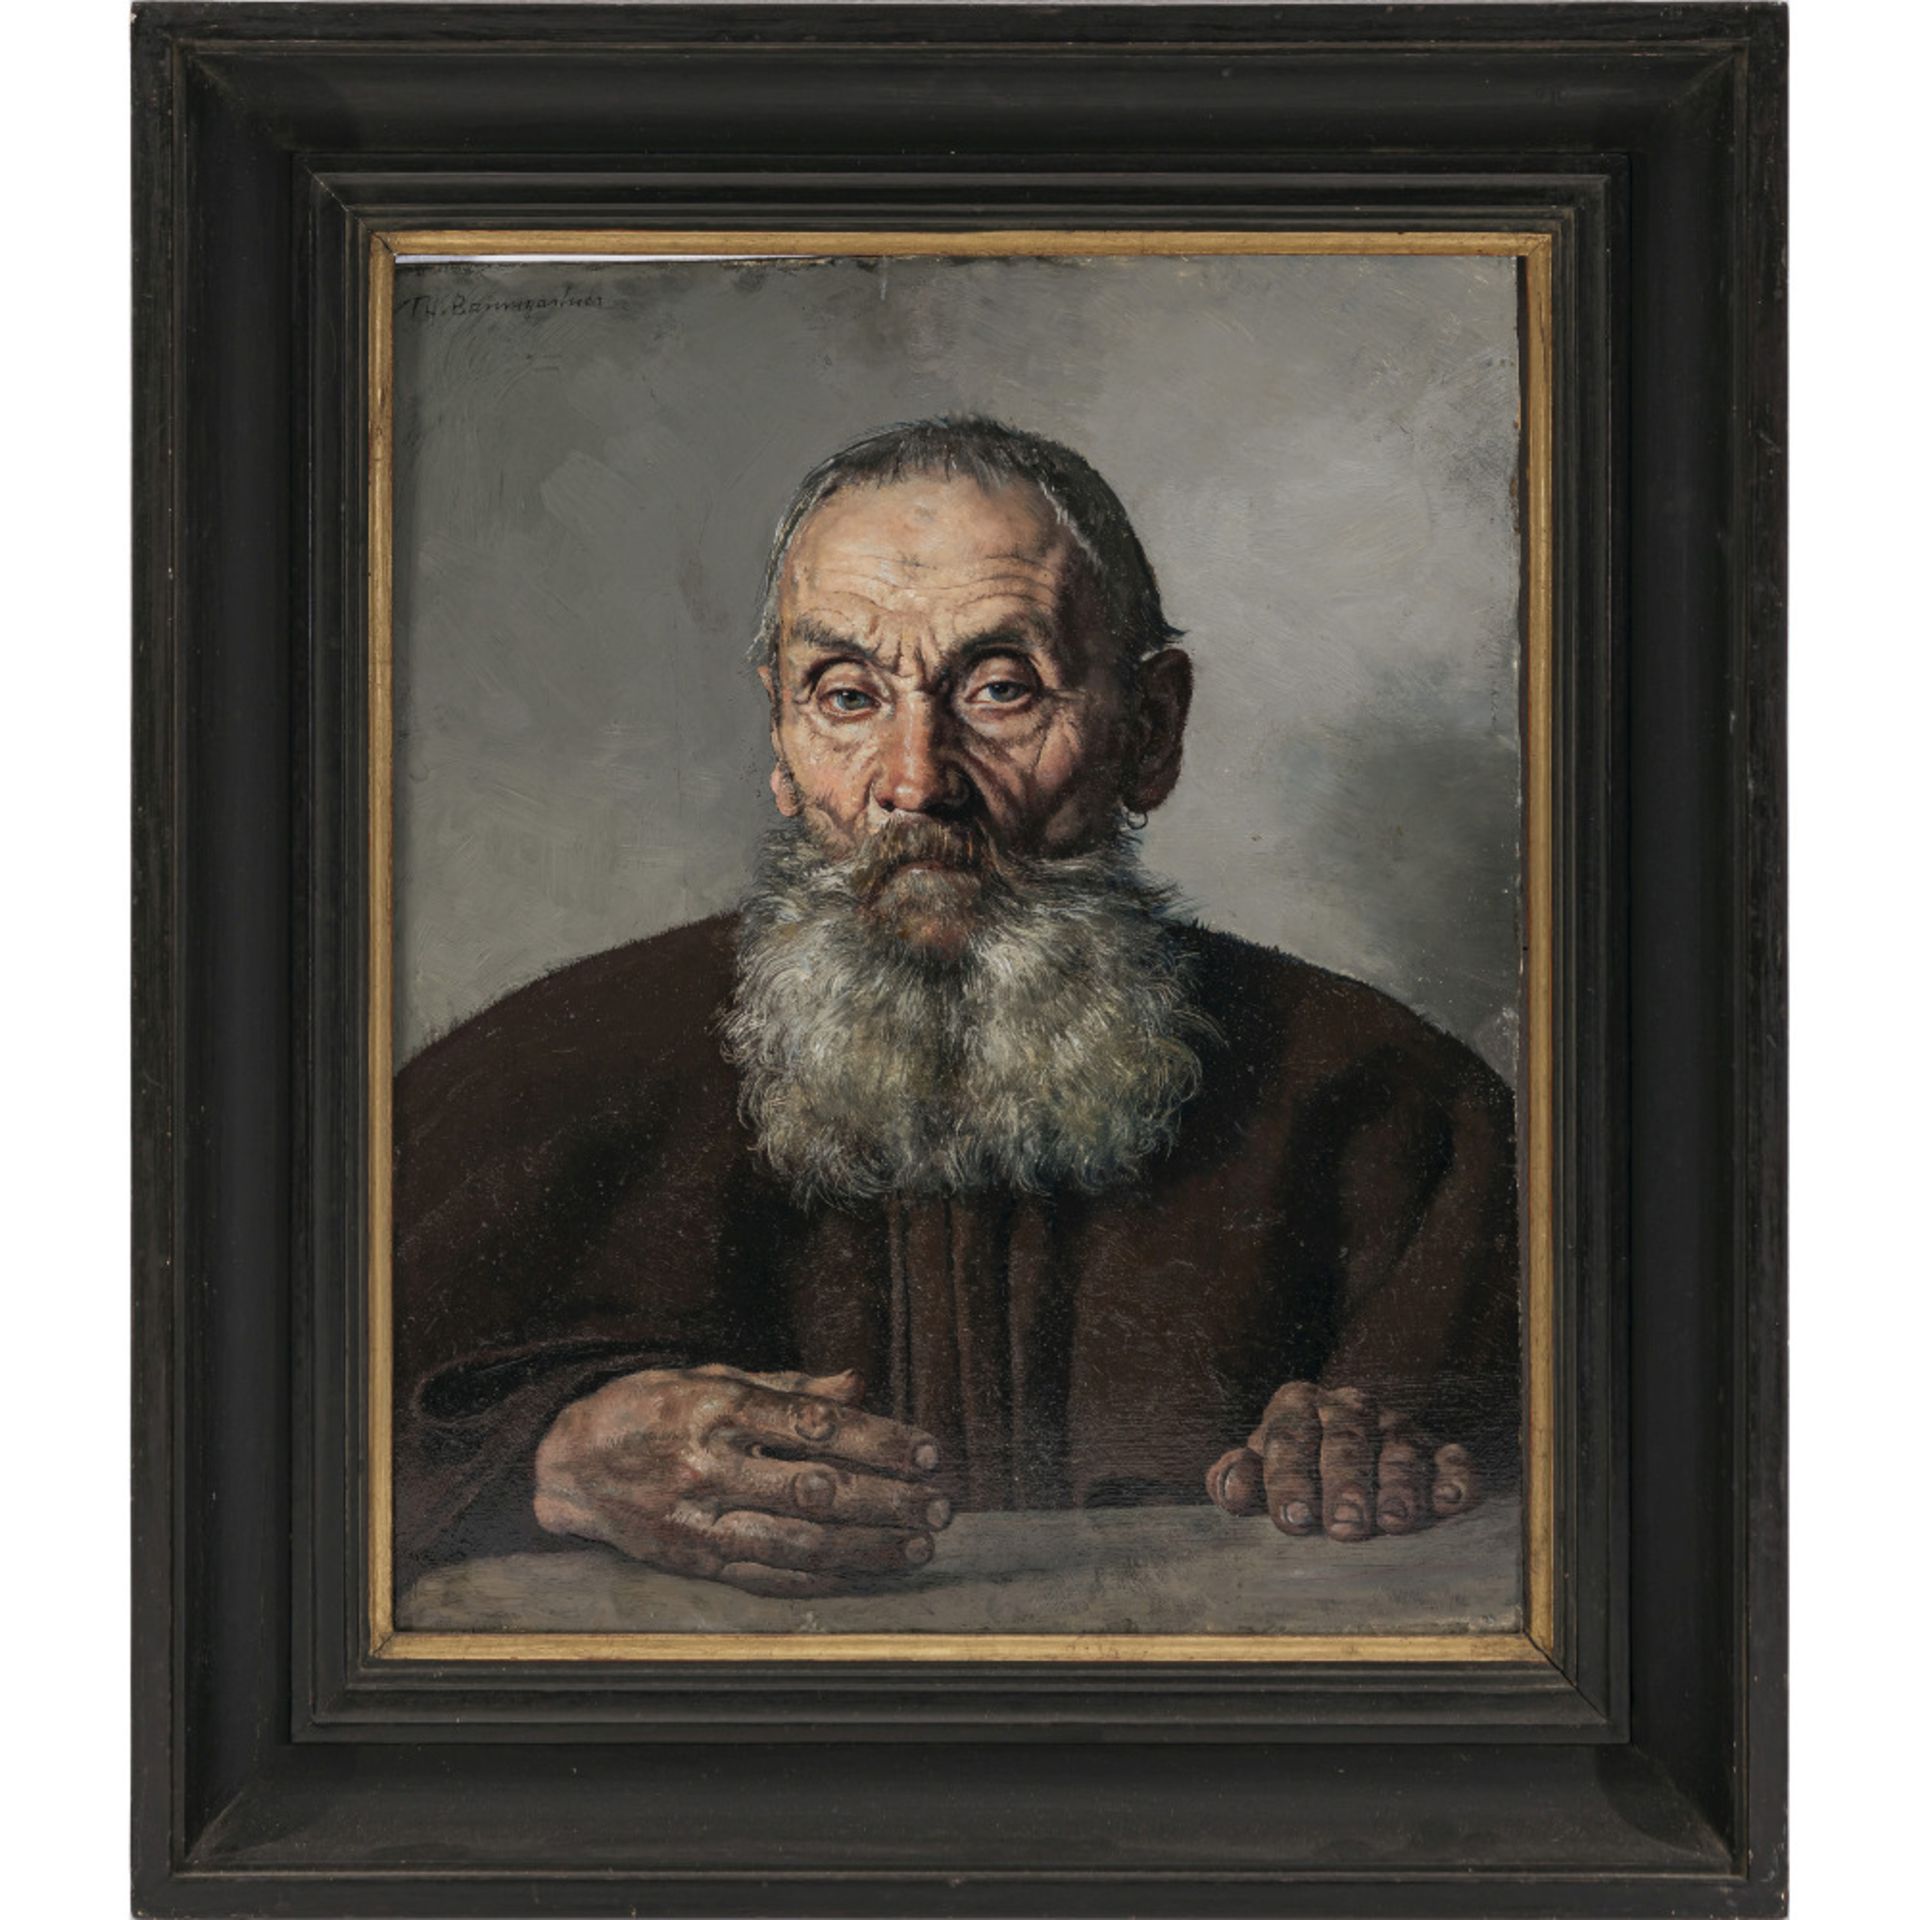 Thomas Baumgartner - Bearded man with earring - Image 2 of 2